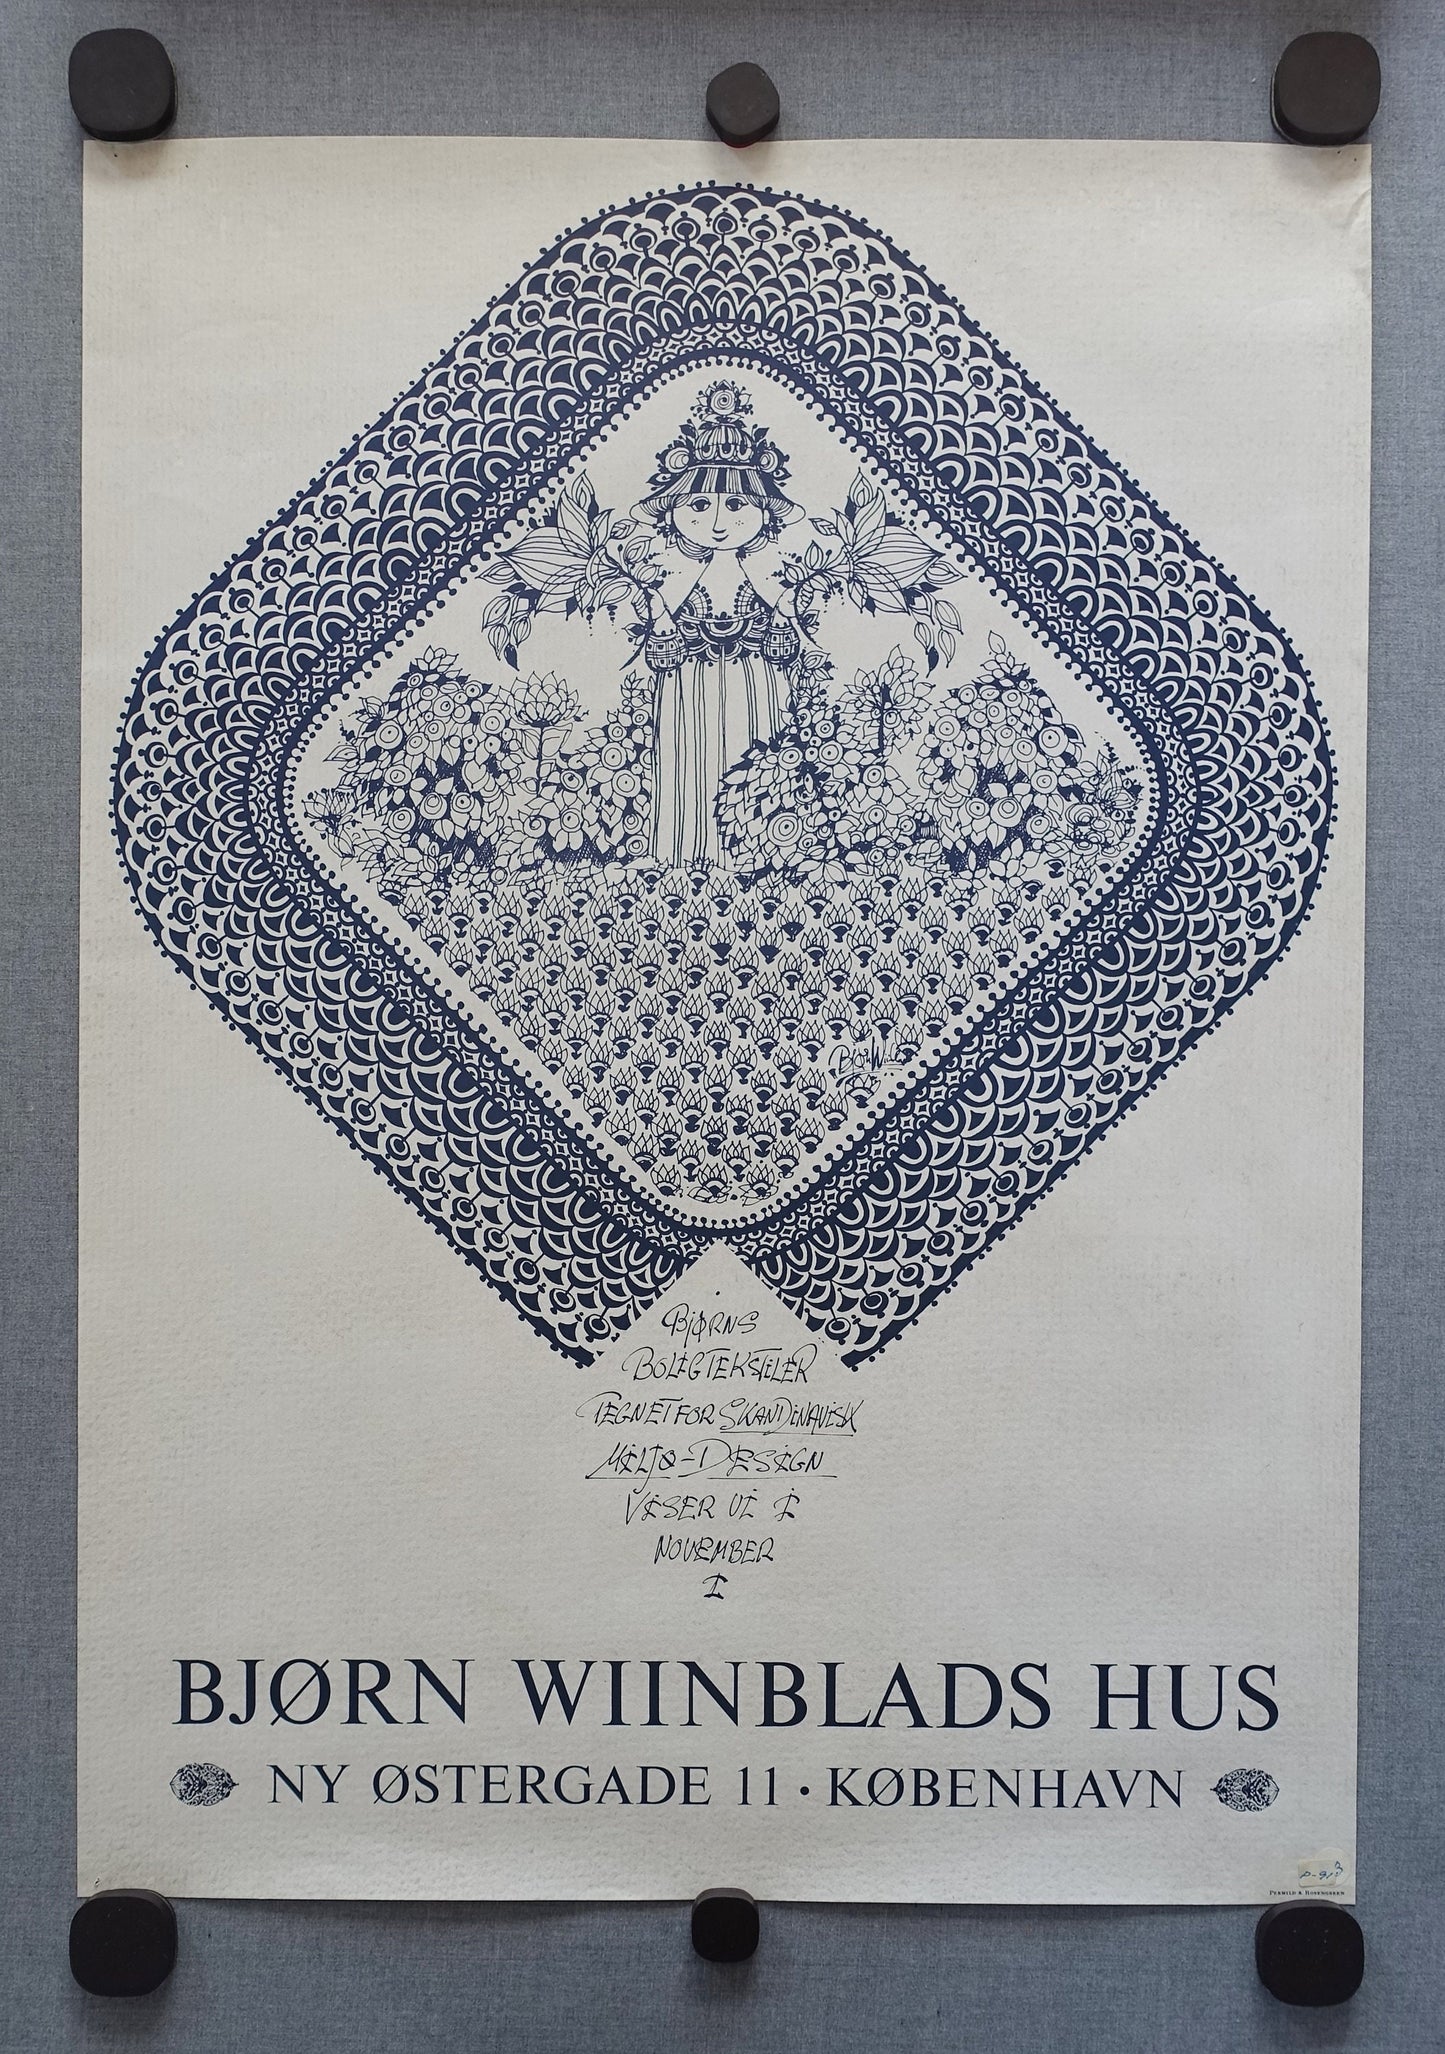 1970s Wiinblad's House Exhibition Poster I - Original Vintage Poster